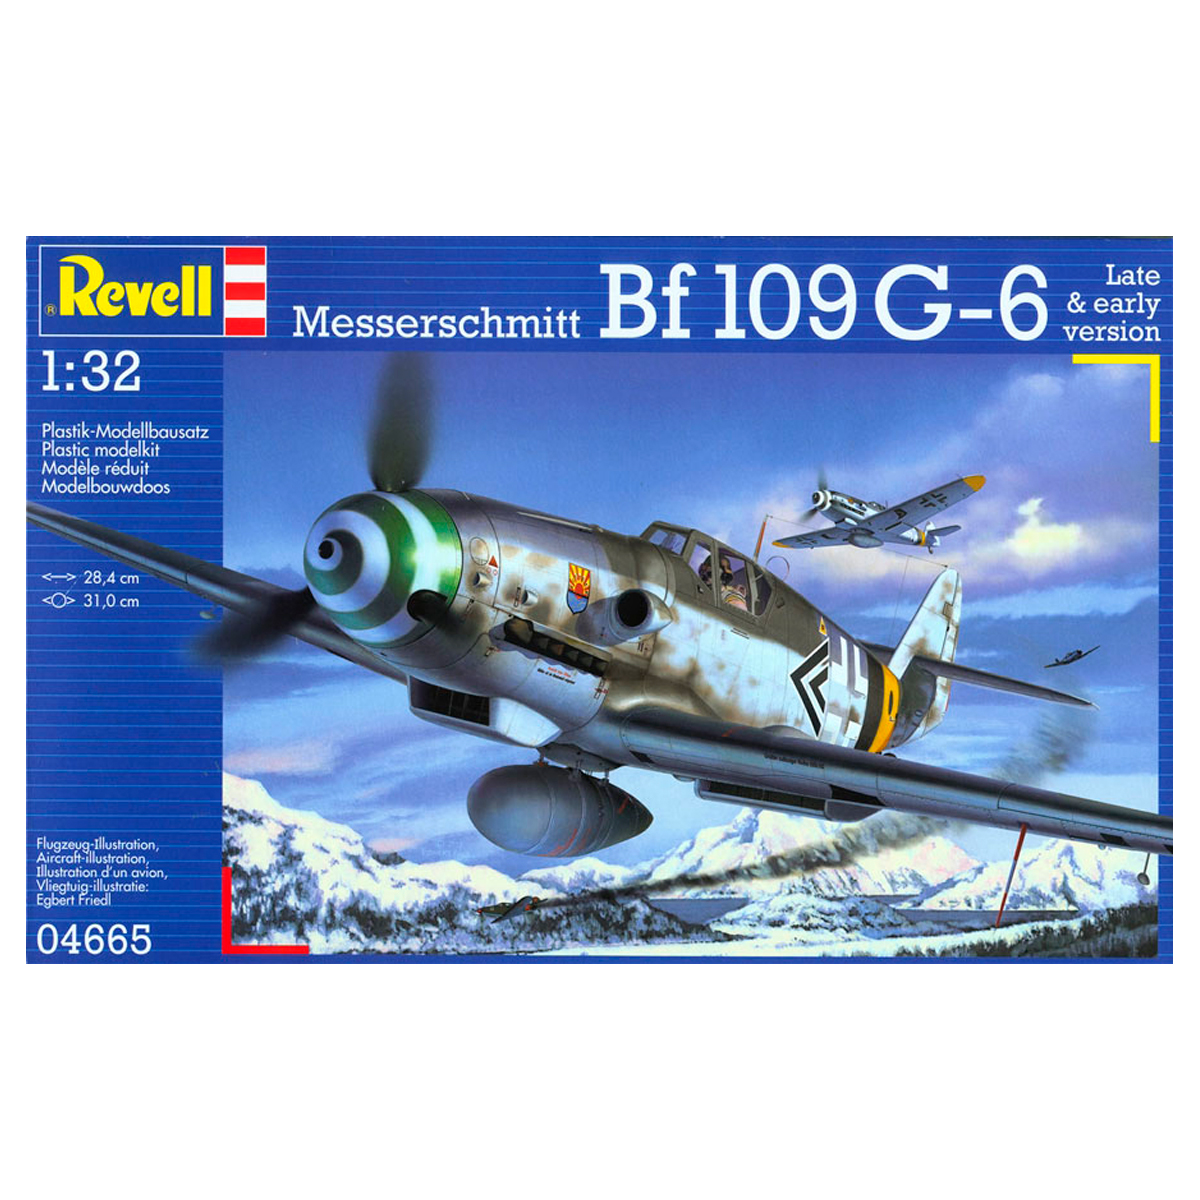 Messerschmitt Bf109 G-6 (Late or Early version) 1/32